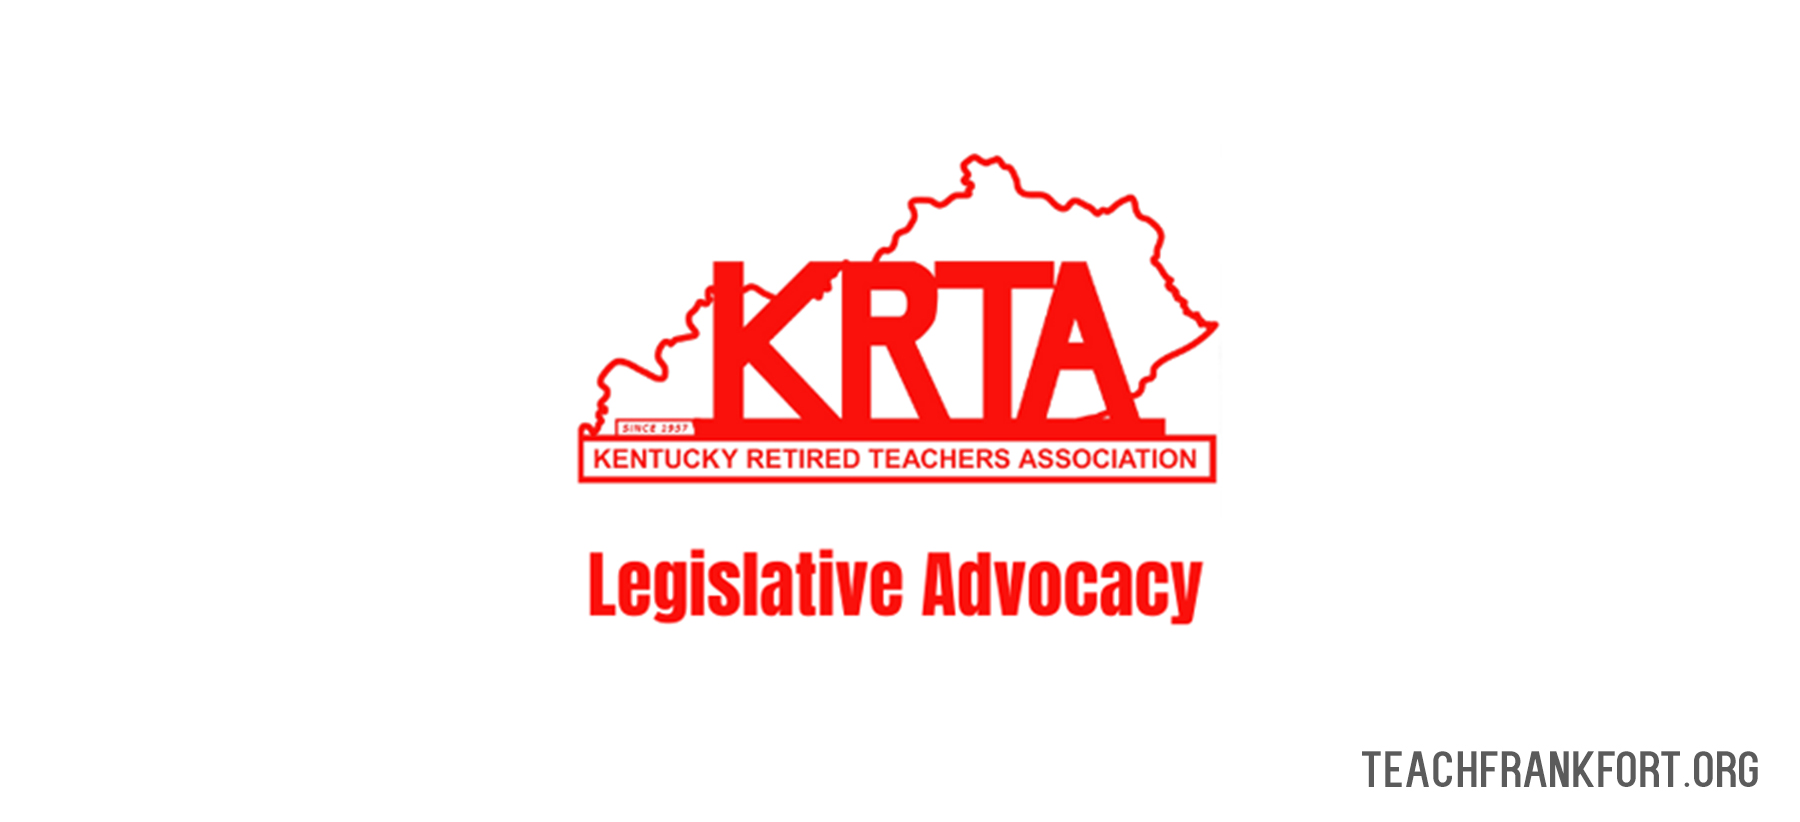 KRTA Legislative Advocacy Logo - Kentucky Retired Teachers Association - Since 1957 | TeachFrankfort.org